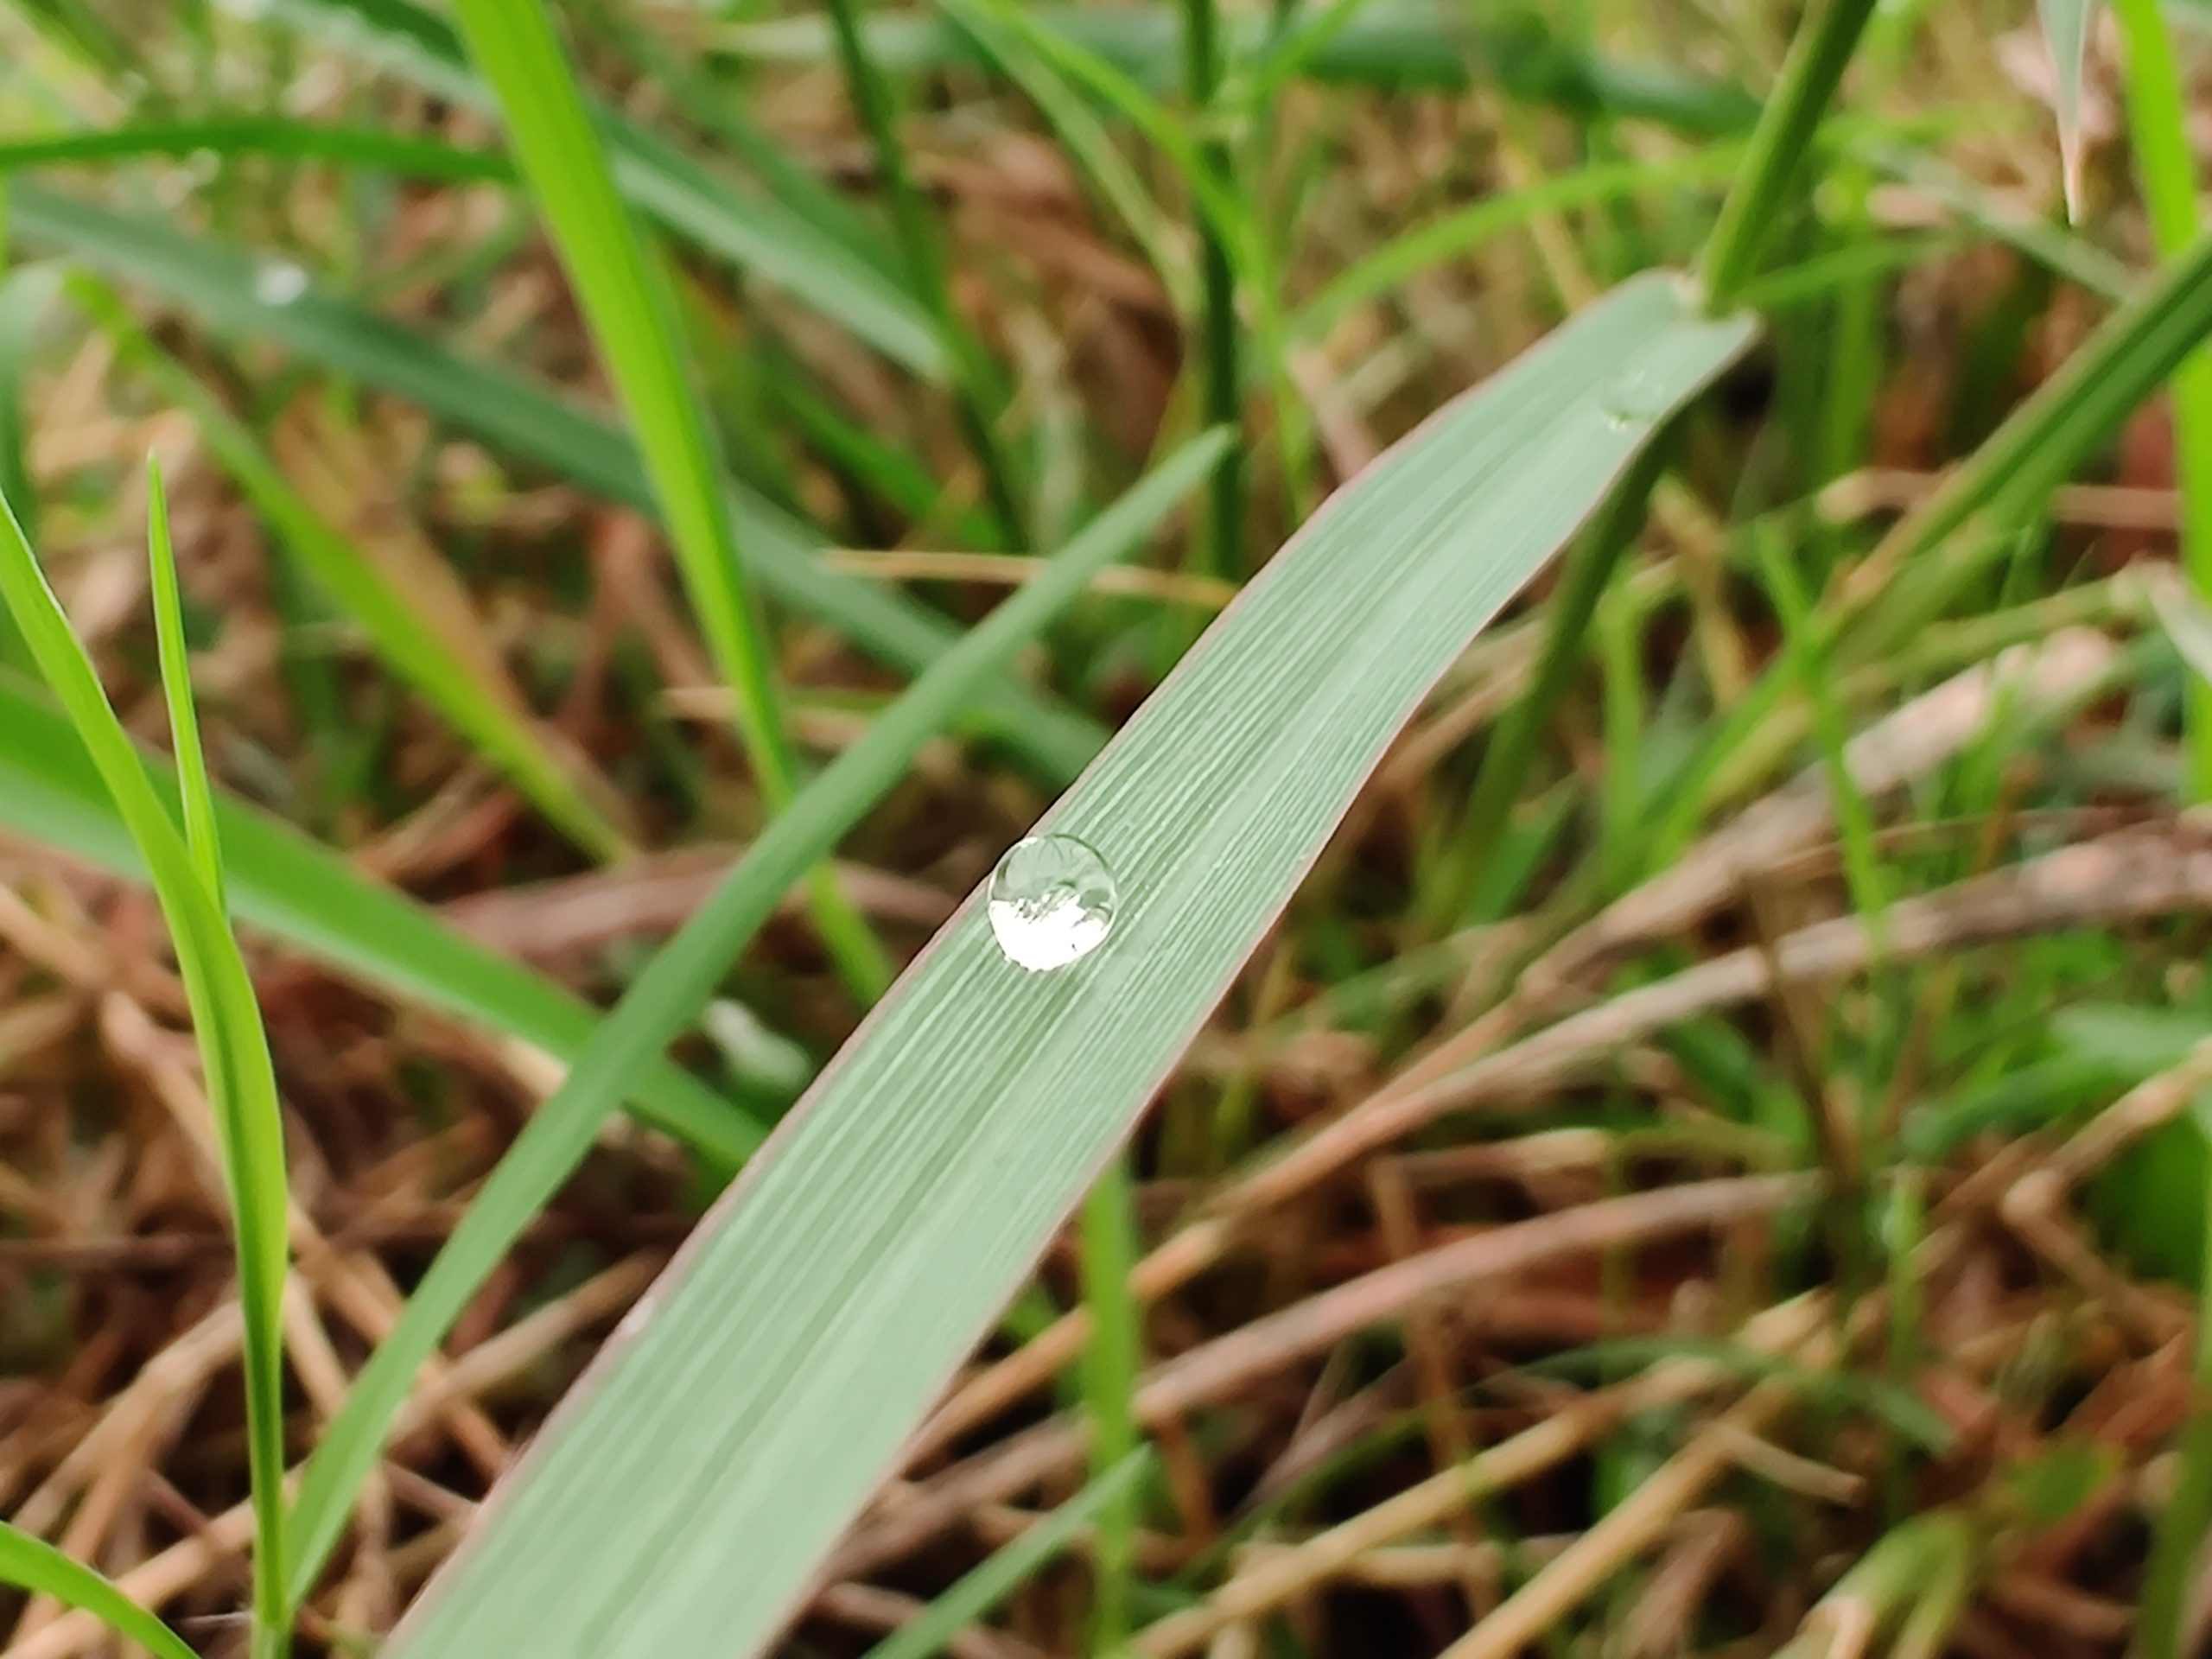 water drop on a leaf